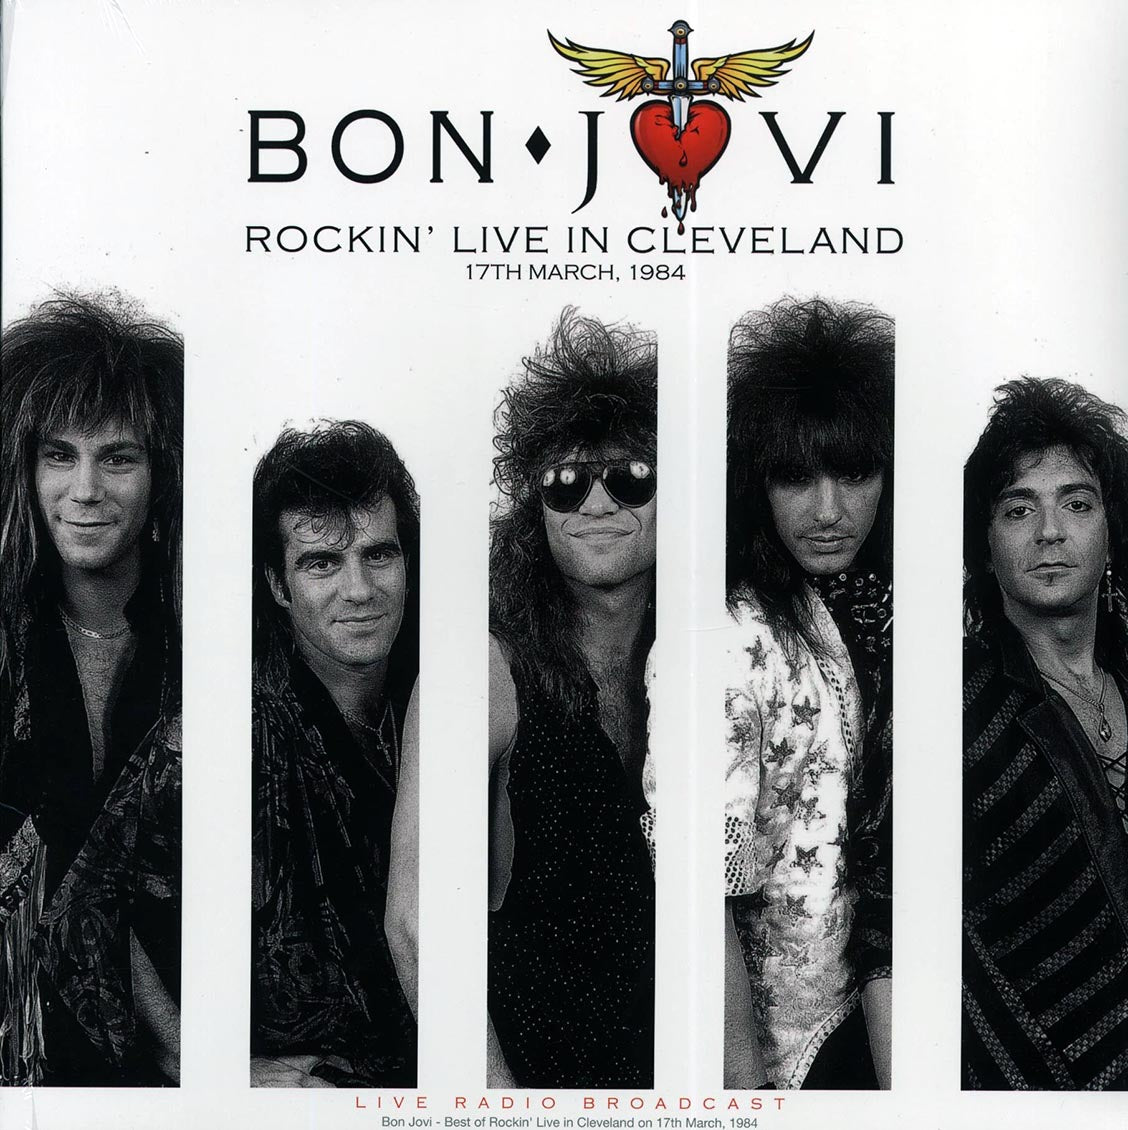 Bon Jovi - Rockin' Live In Cleveland, 17th March, 1984 - Vinyl LP